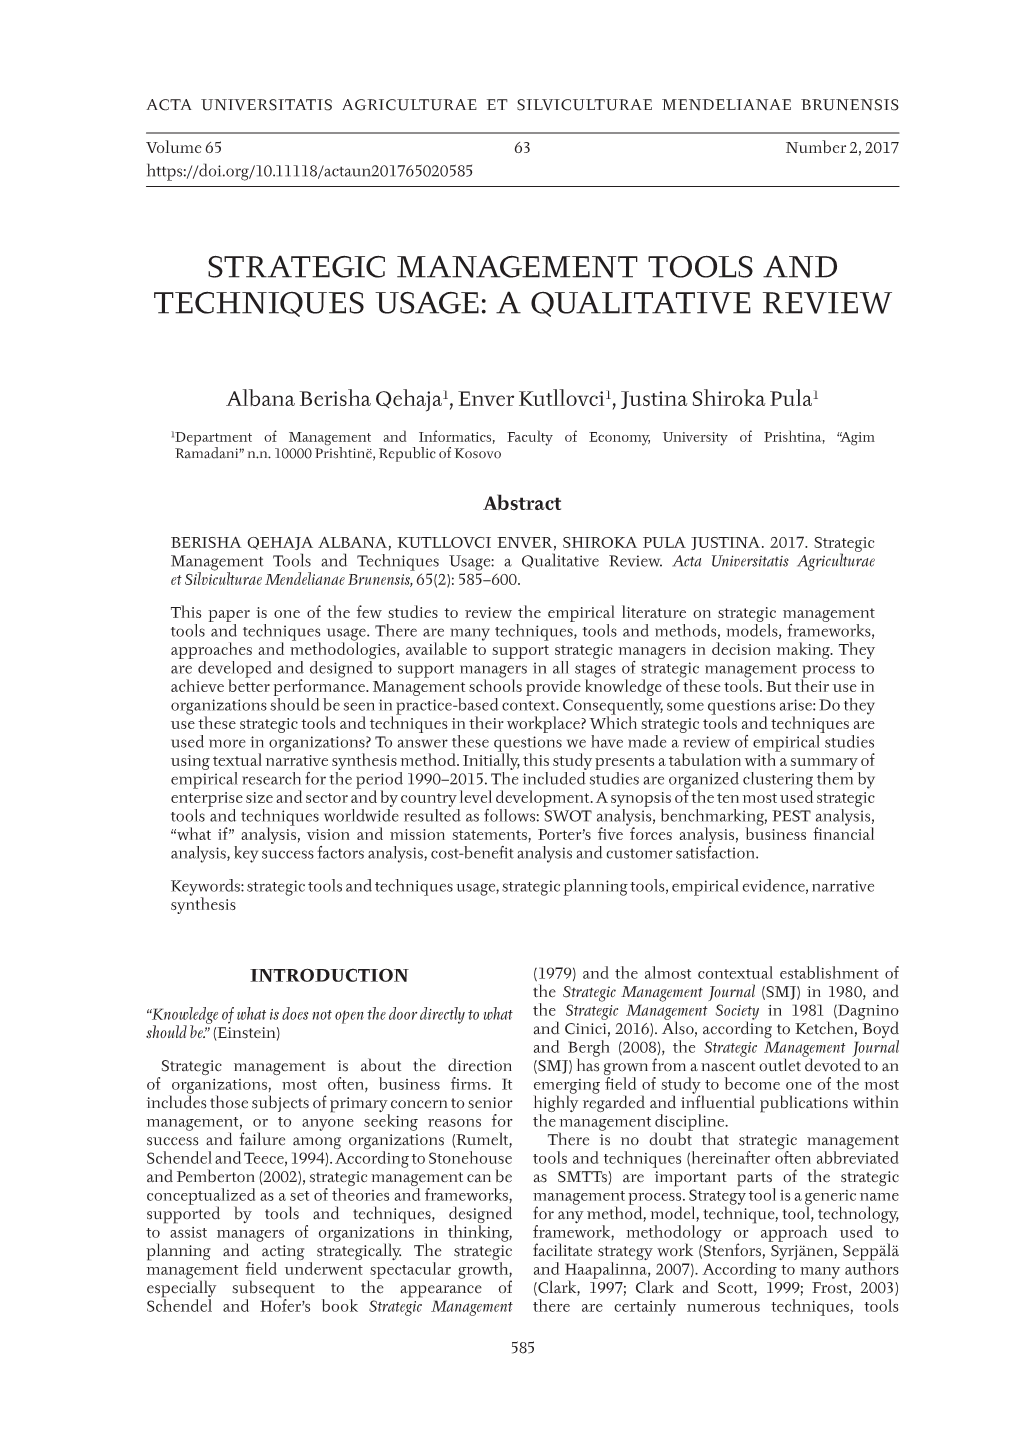 Strategic Management Tools and Techniques Usage: a Qualitative Review